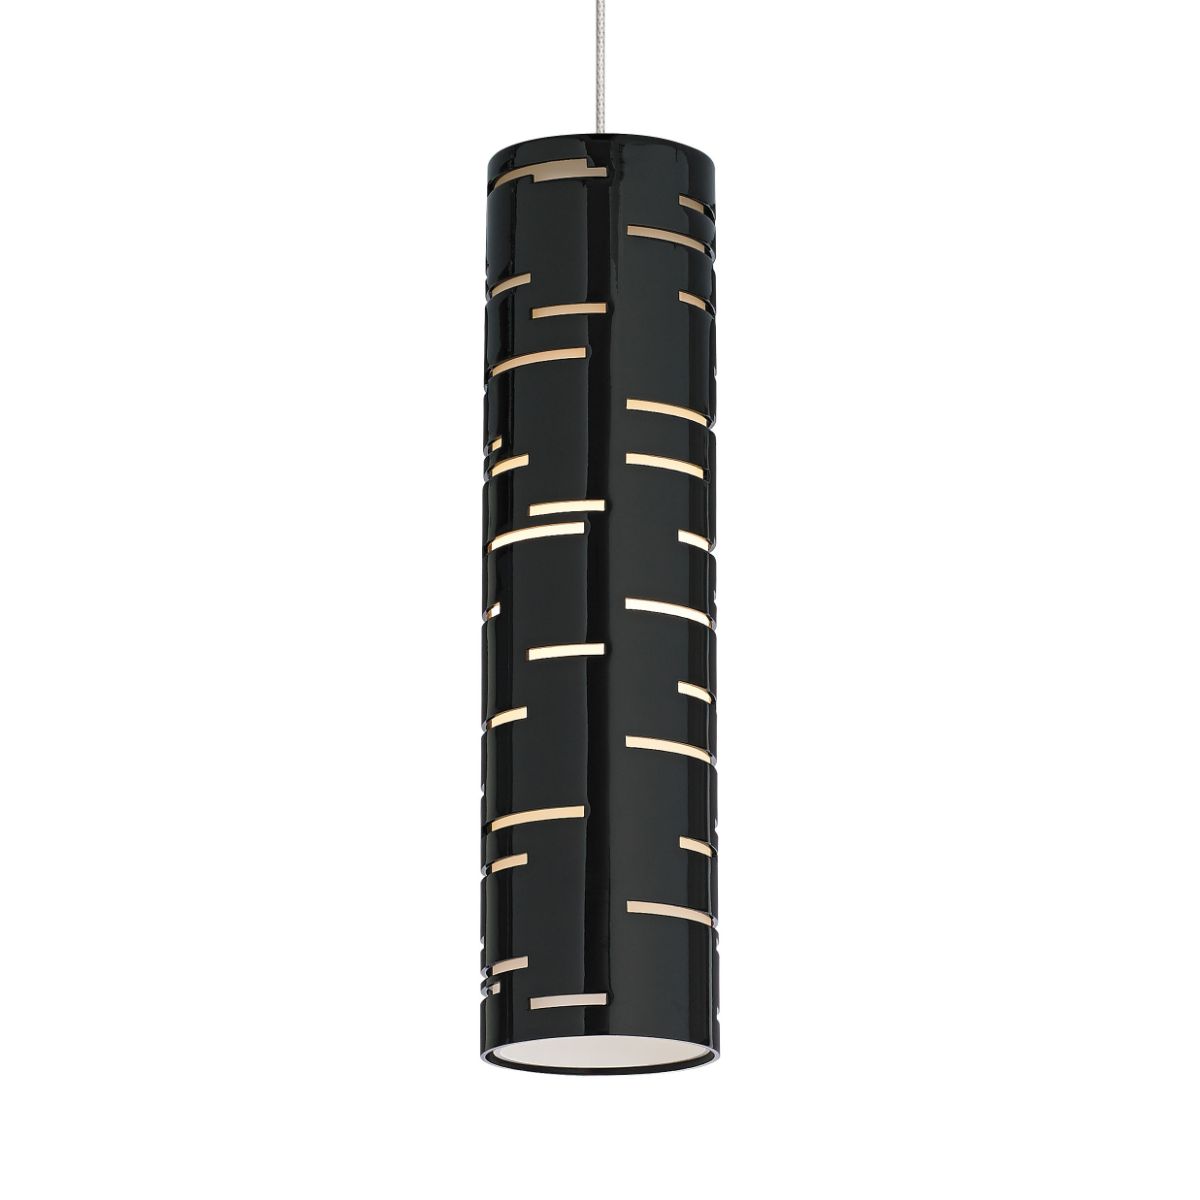 Revel Pendant Light MonoRail Black|Nickel Finish